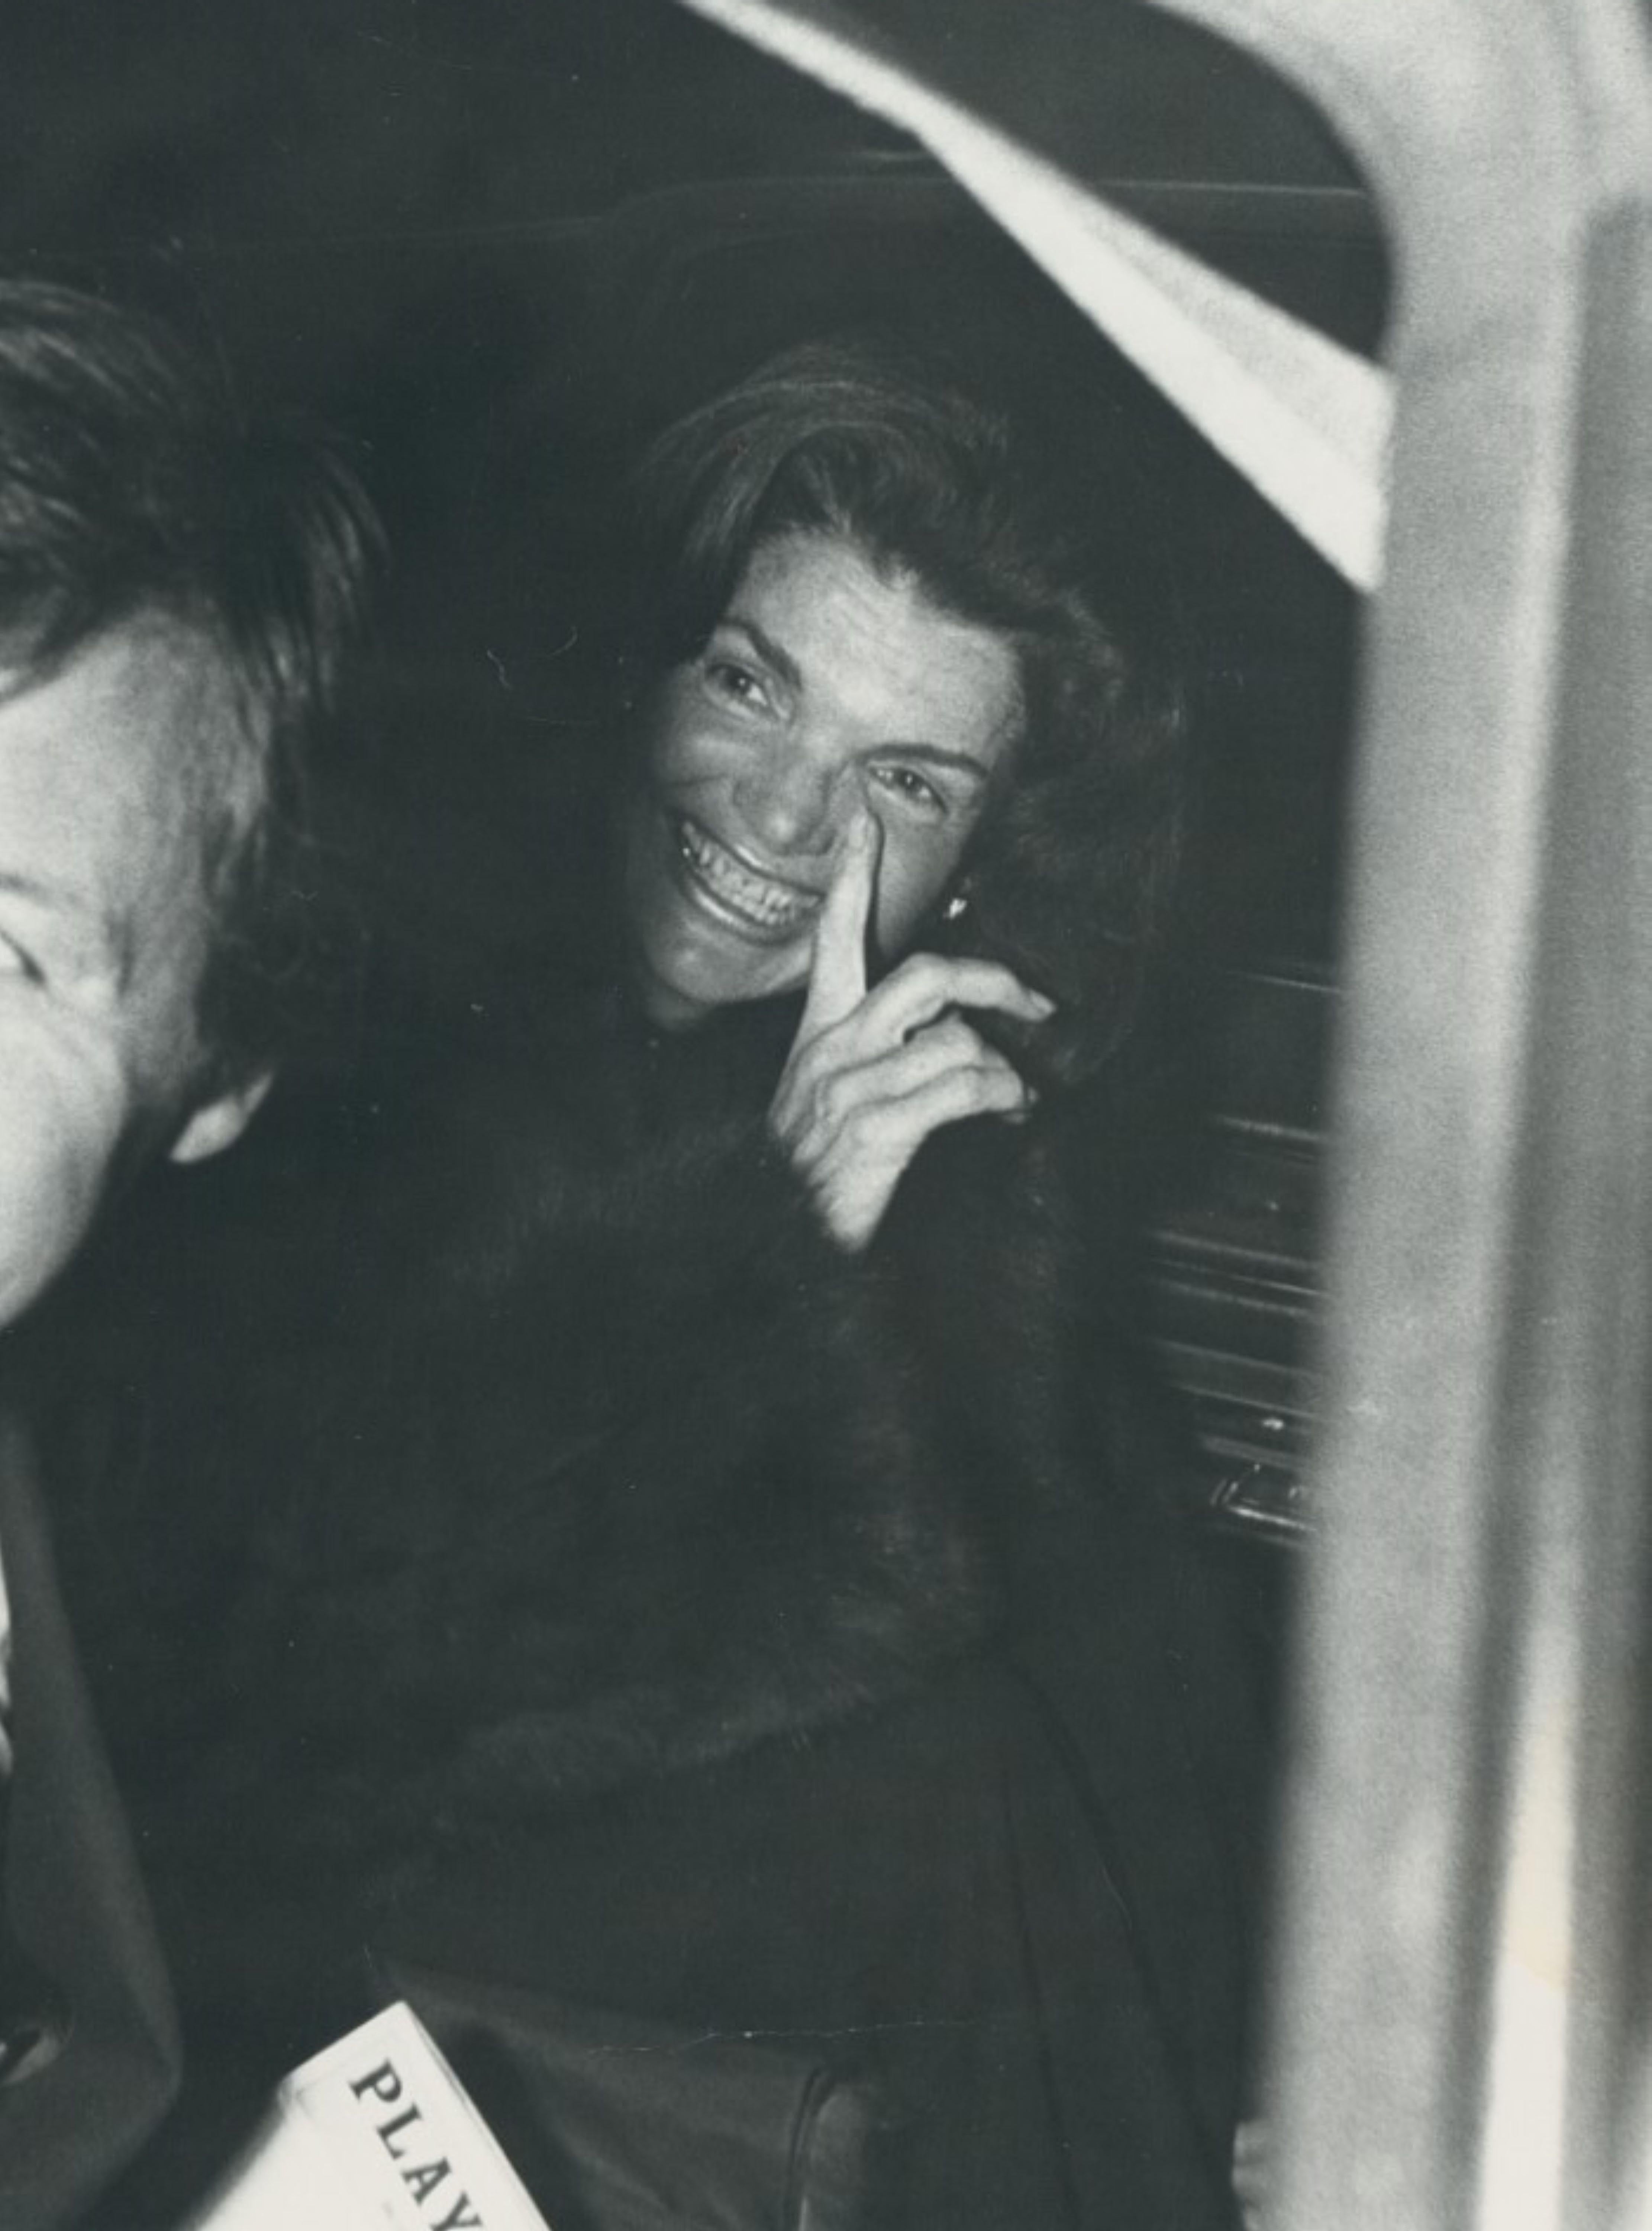 Jackie Kennedy, Schwarz-Weiß-Fotografie, ca. 1960 (Moderne), Art, von Oscar Abolafia